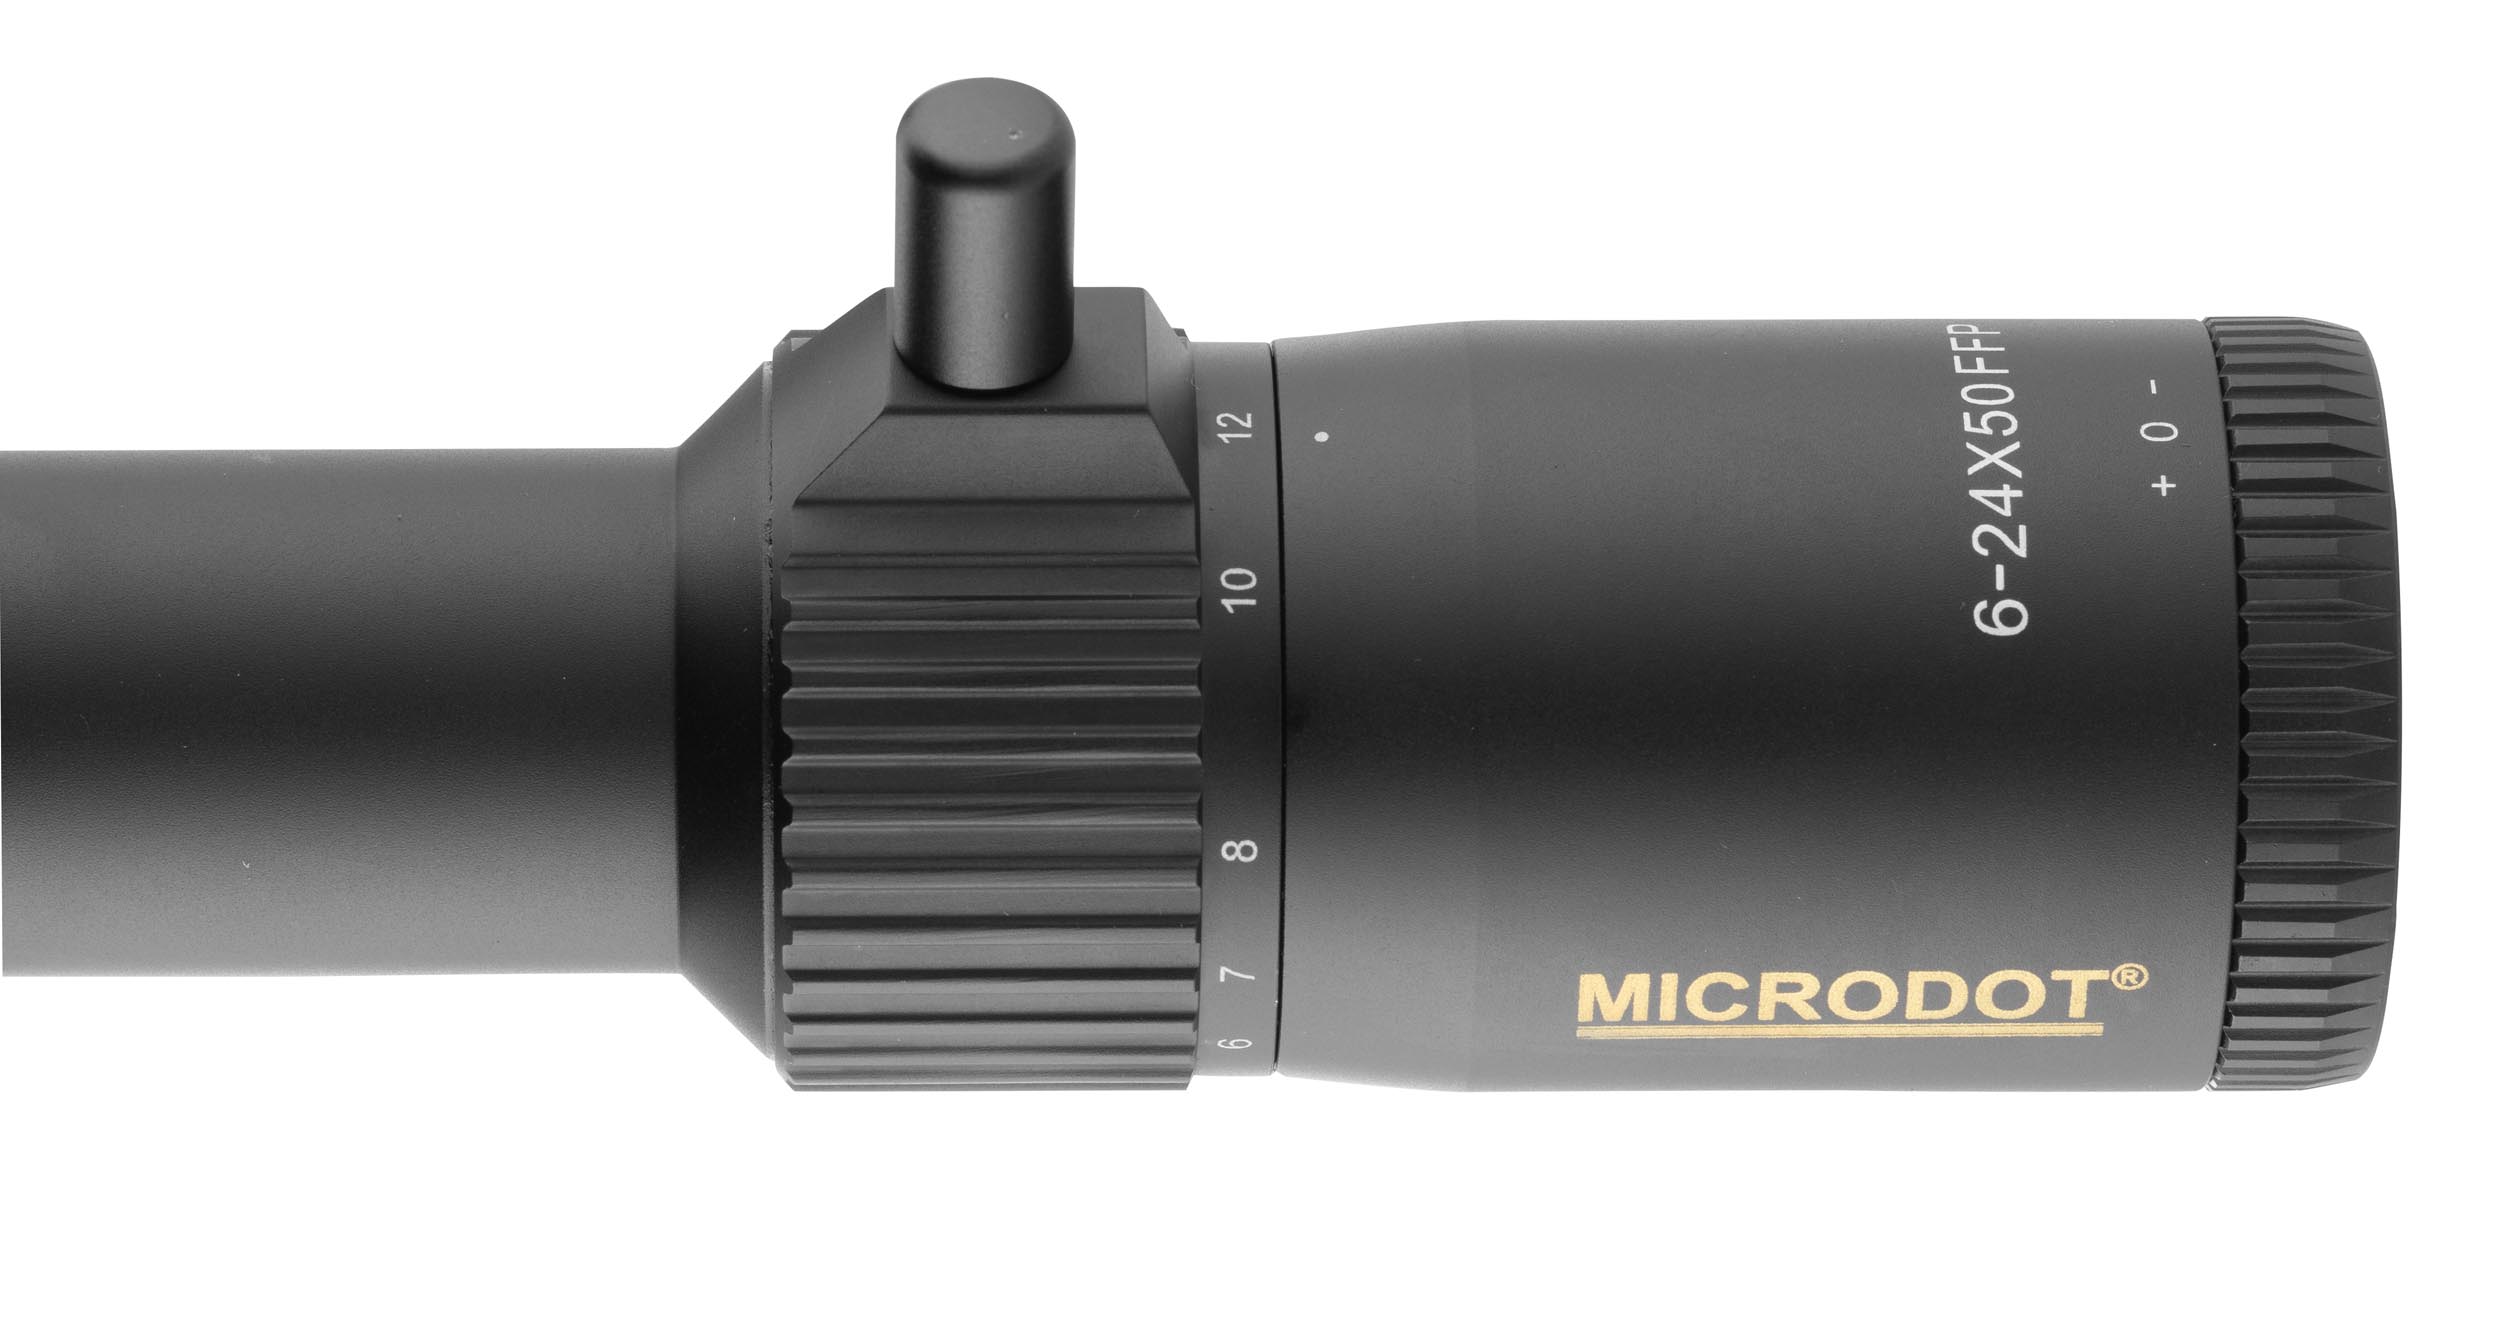 OCT6150-9 Microdot FFP 6-24 x 50 scope - MOA